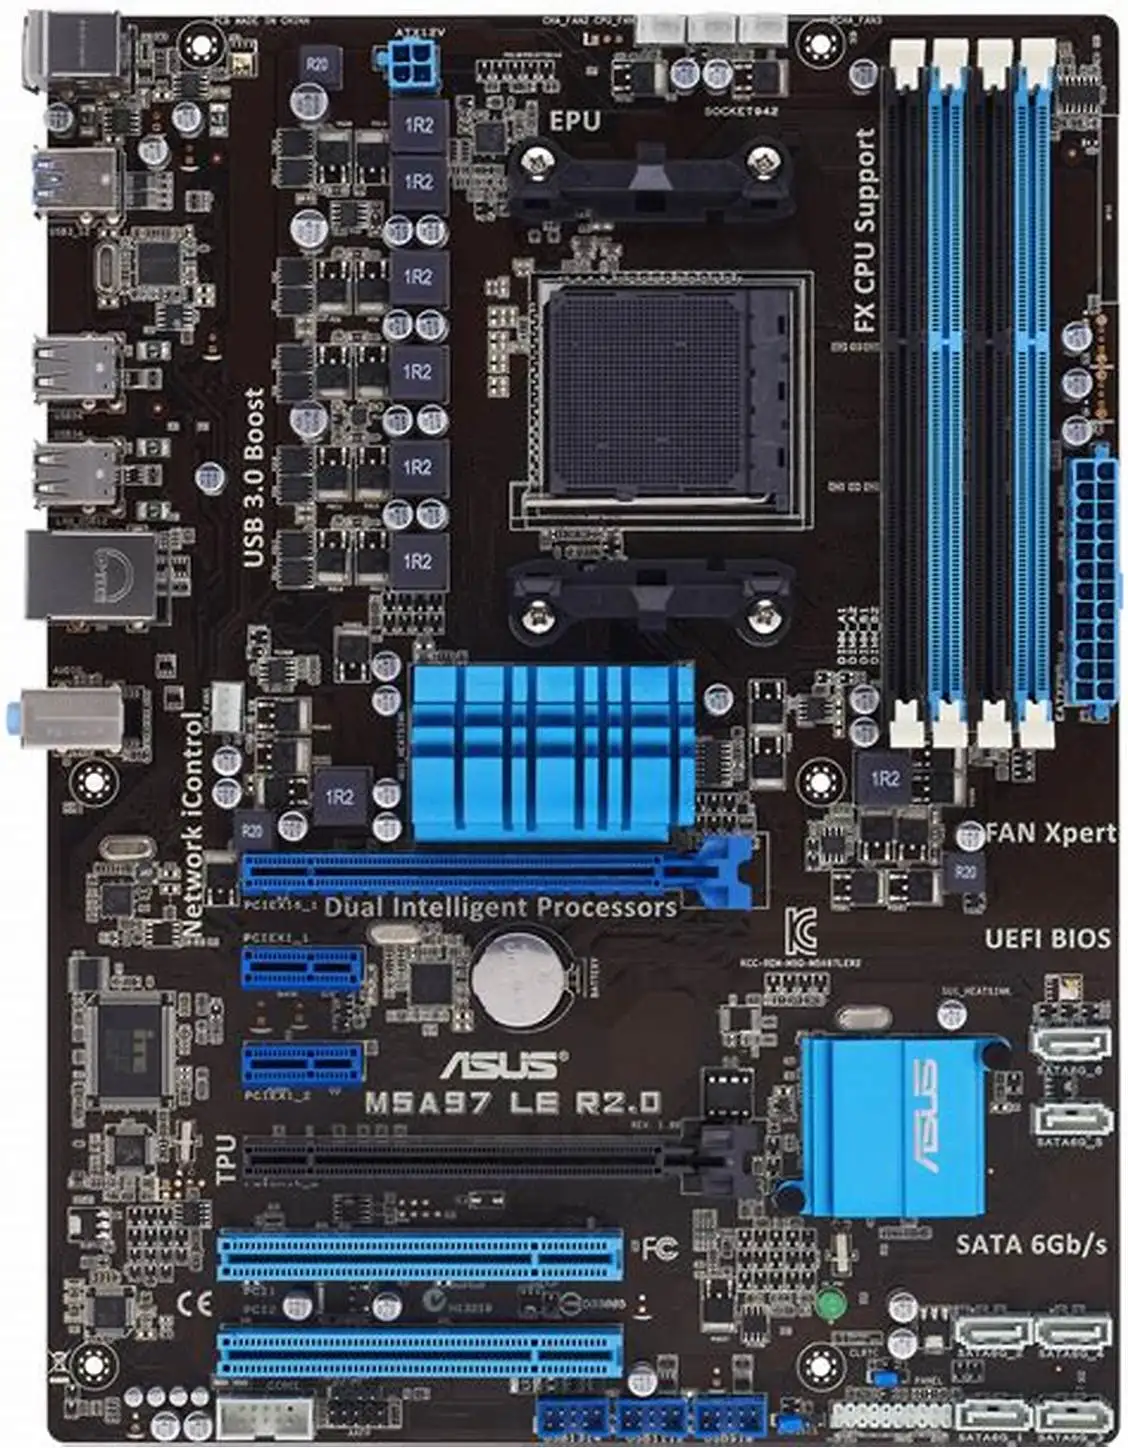 

Asus M5A97 LE R2.0 Socket AM3+ Motherboard DDR3 RAM For Athlon IIX2 240e FX-8120 cpus PCI-E 2.0 AMD 970 USB3.0 ATX Placa-mãe